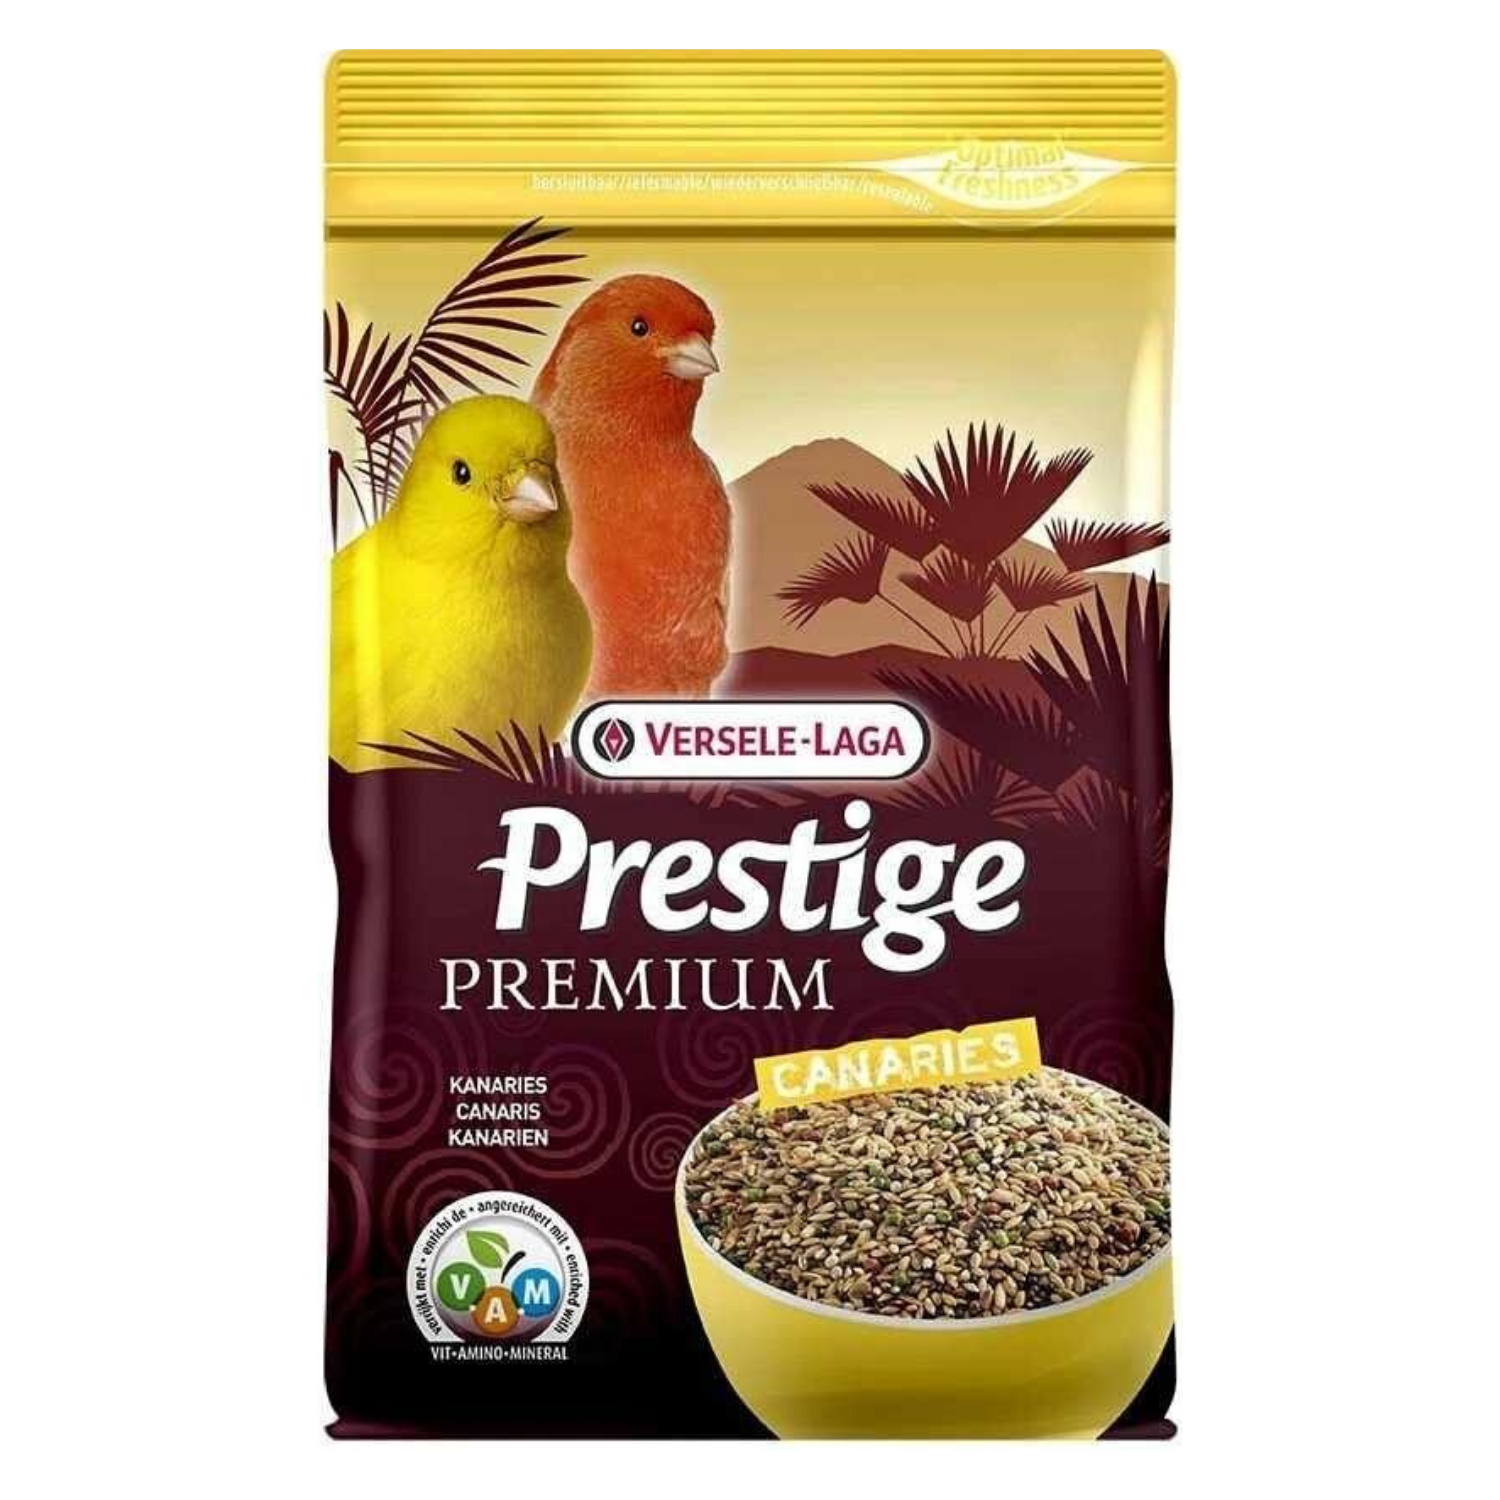 Versele Laga Prestige Premium Seed Mixture for Canaries - 800g